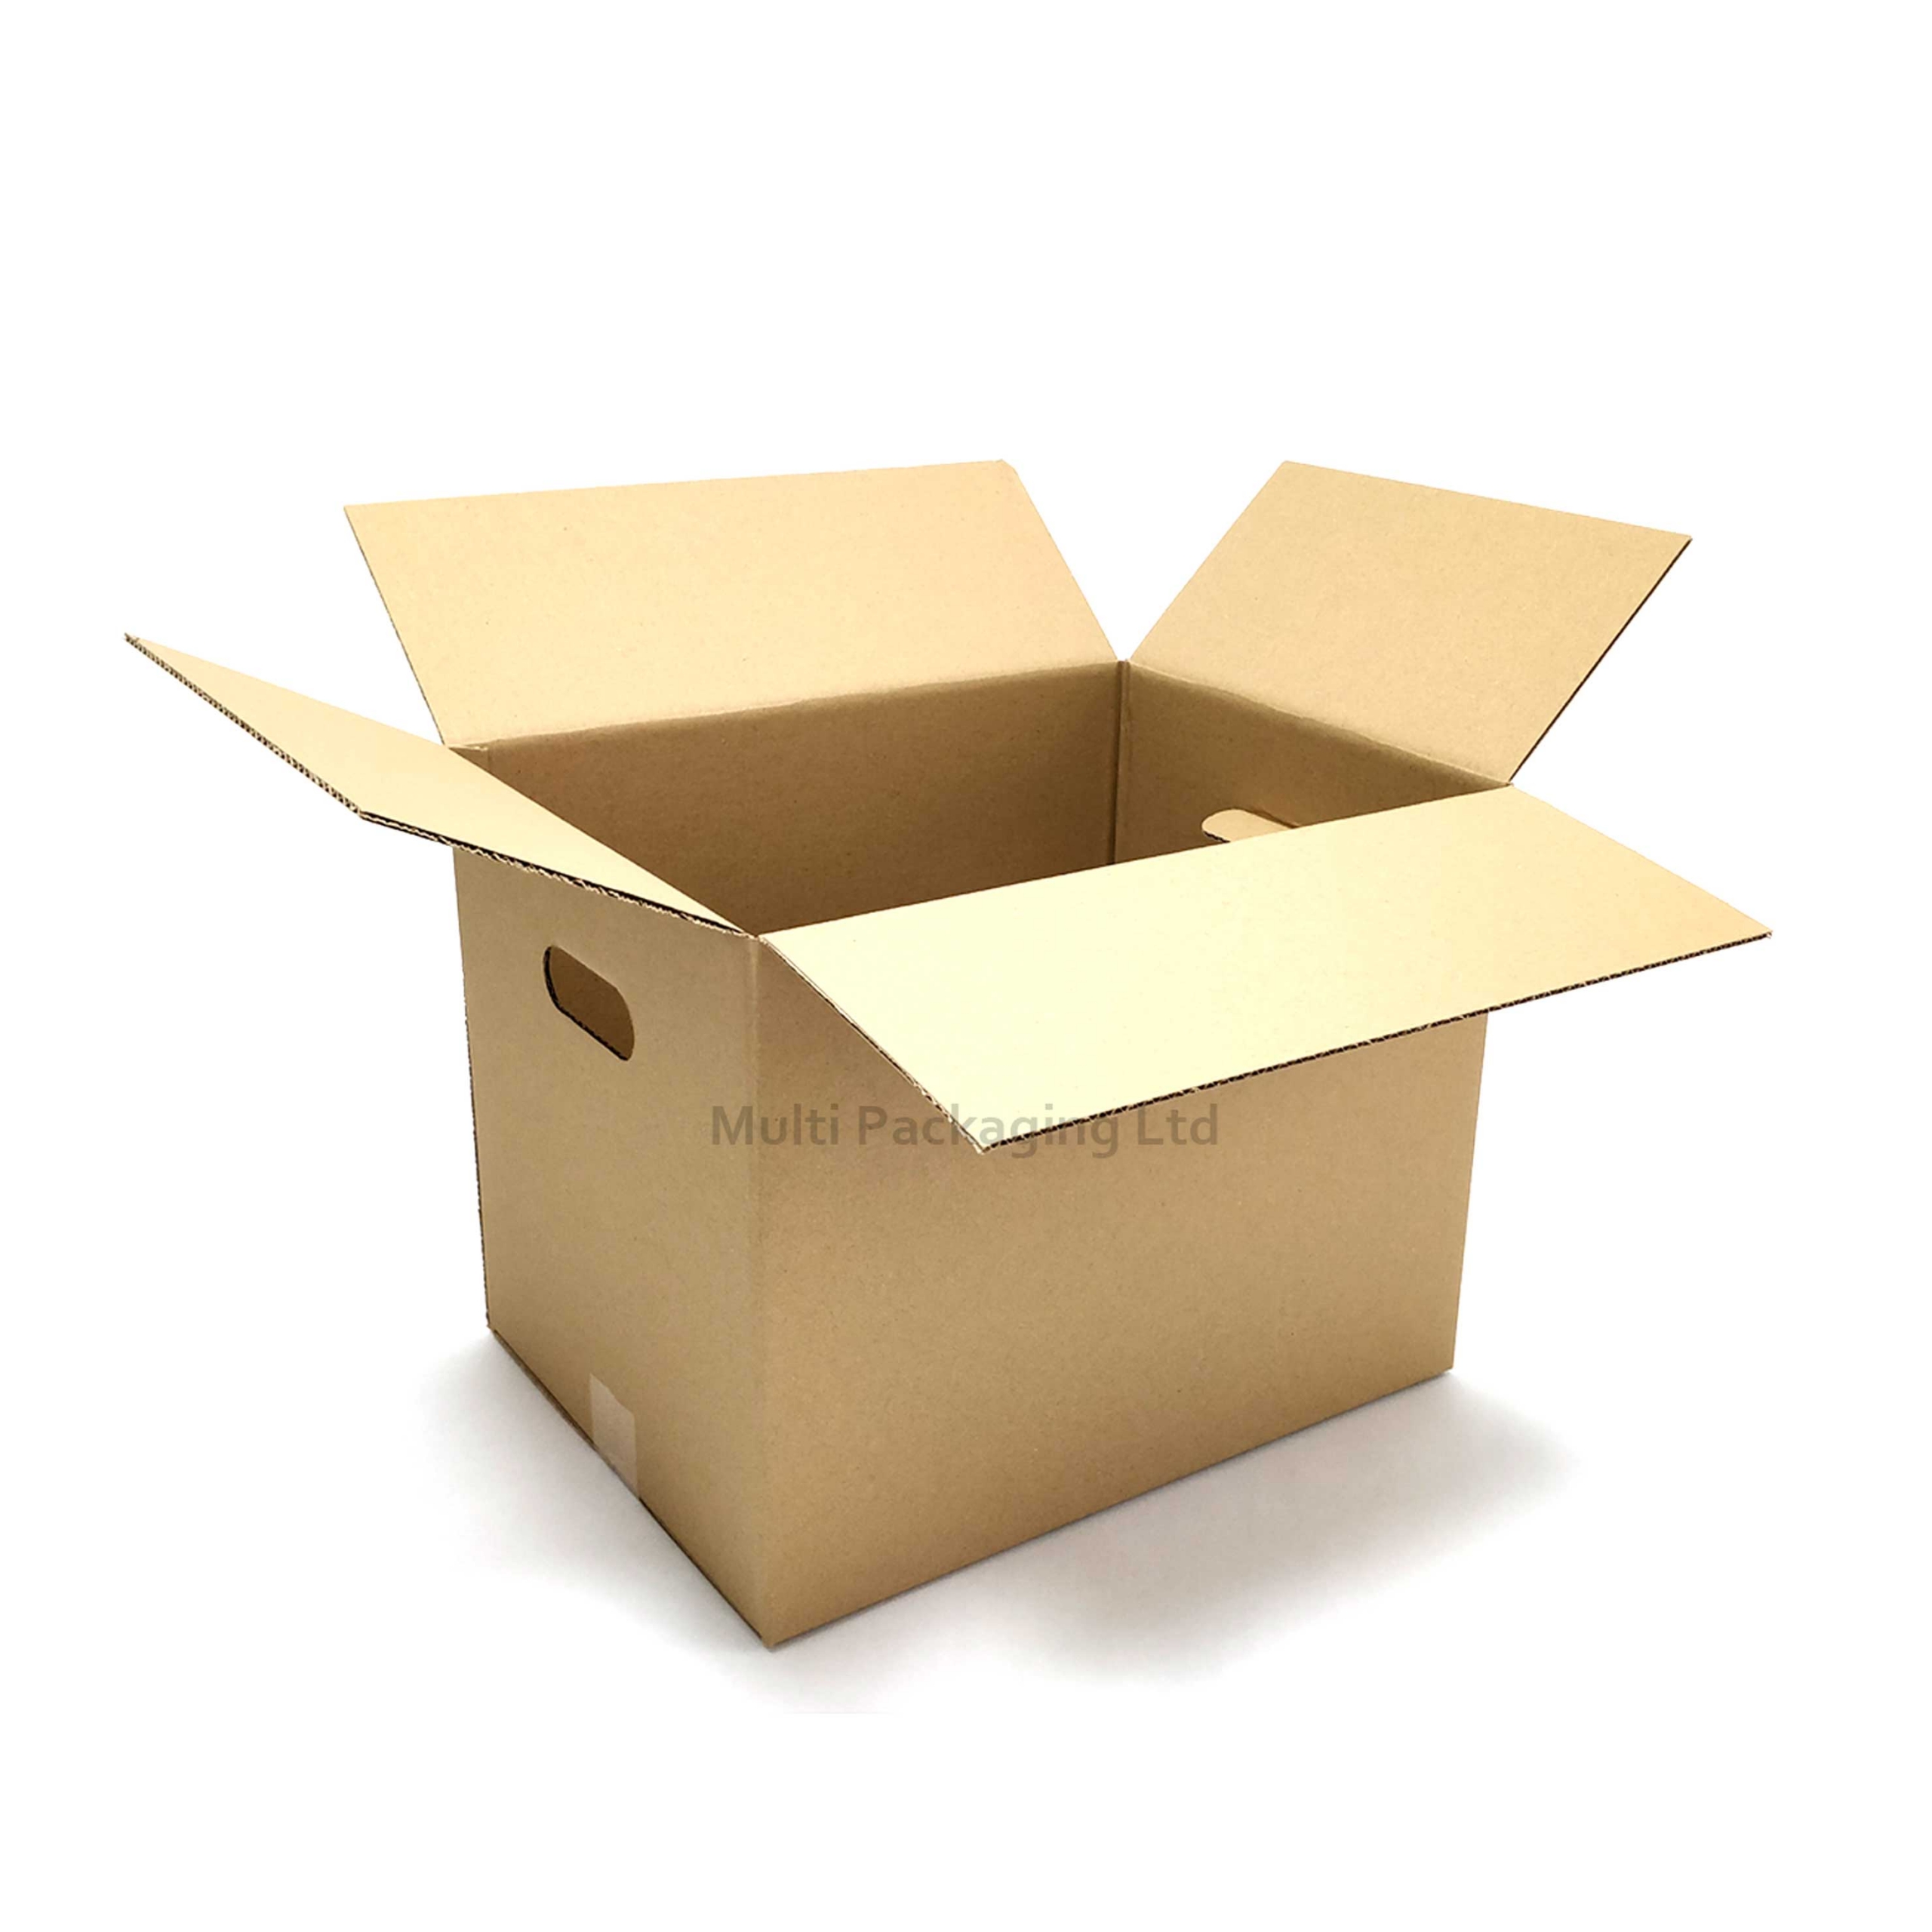 Grocery Box – Multi Packaging Ltd